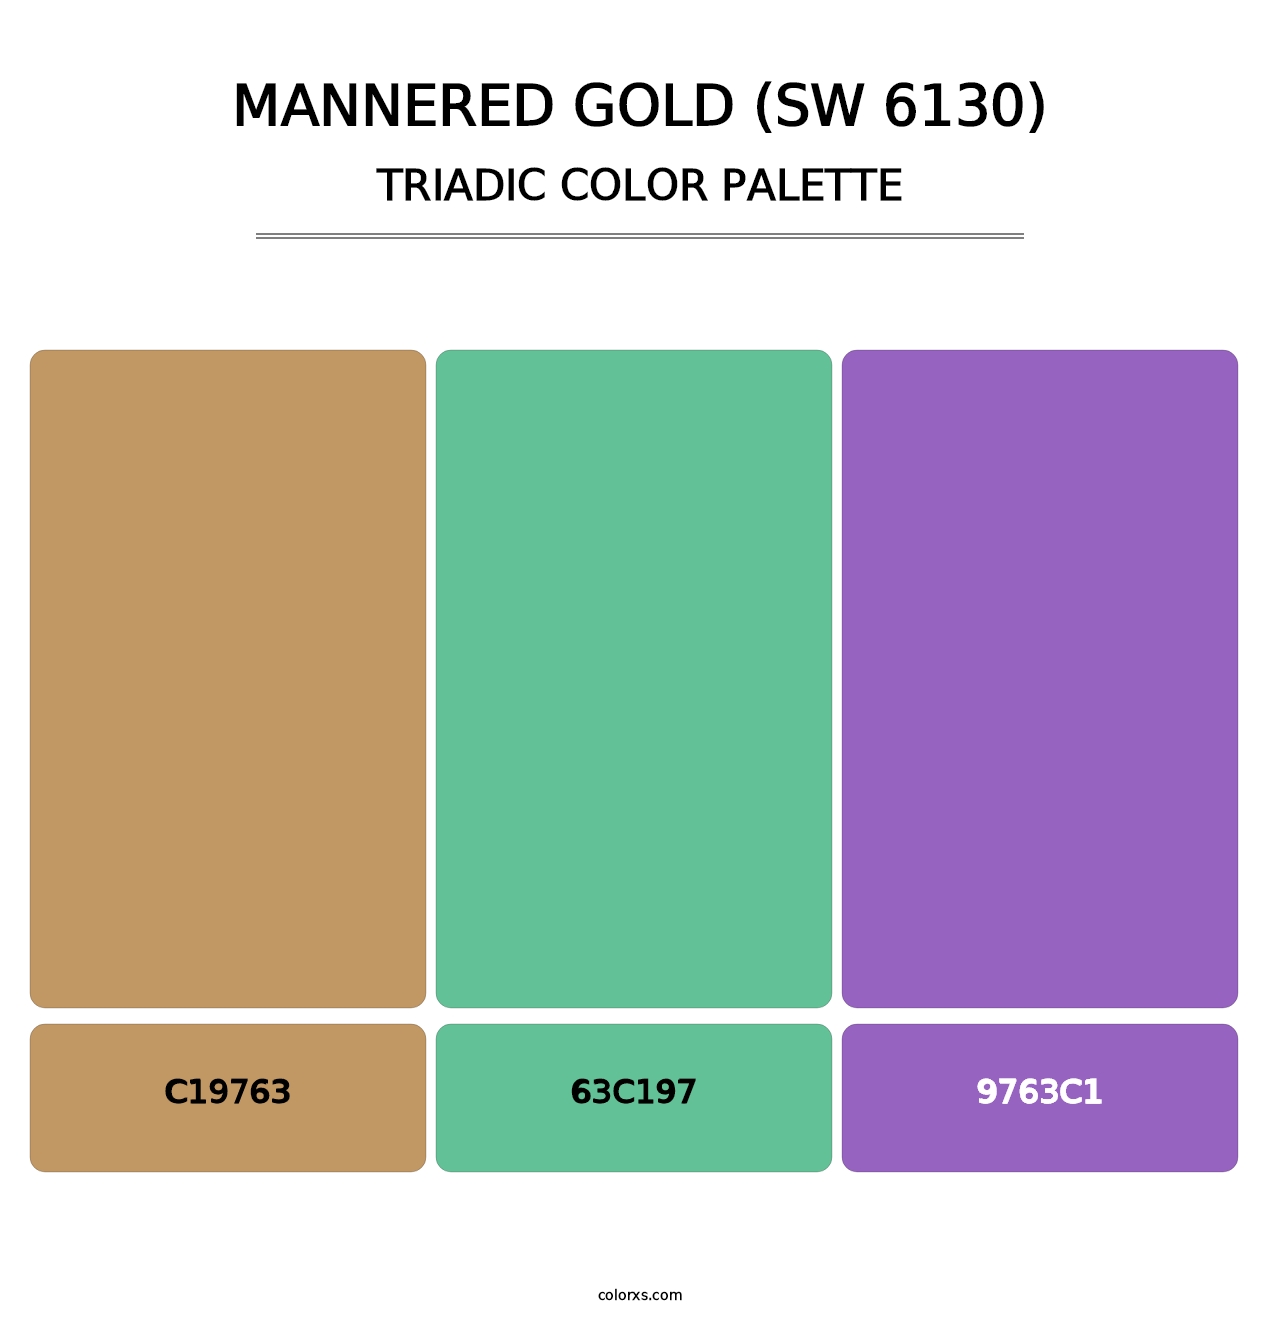 Mannered Gold (SW 6130) - Triadic Color Palette